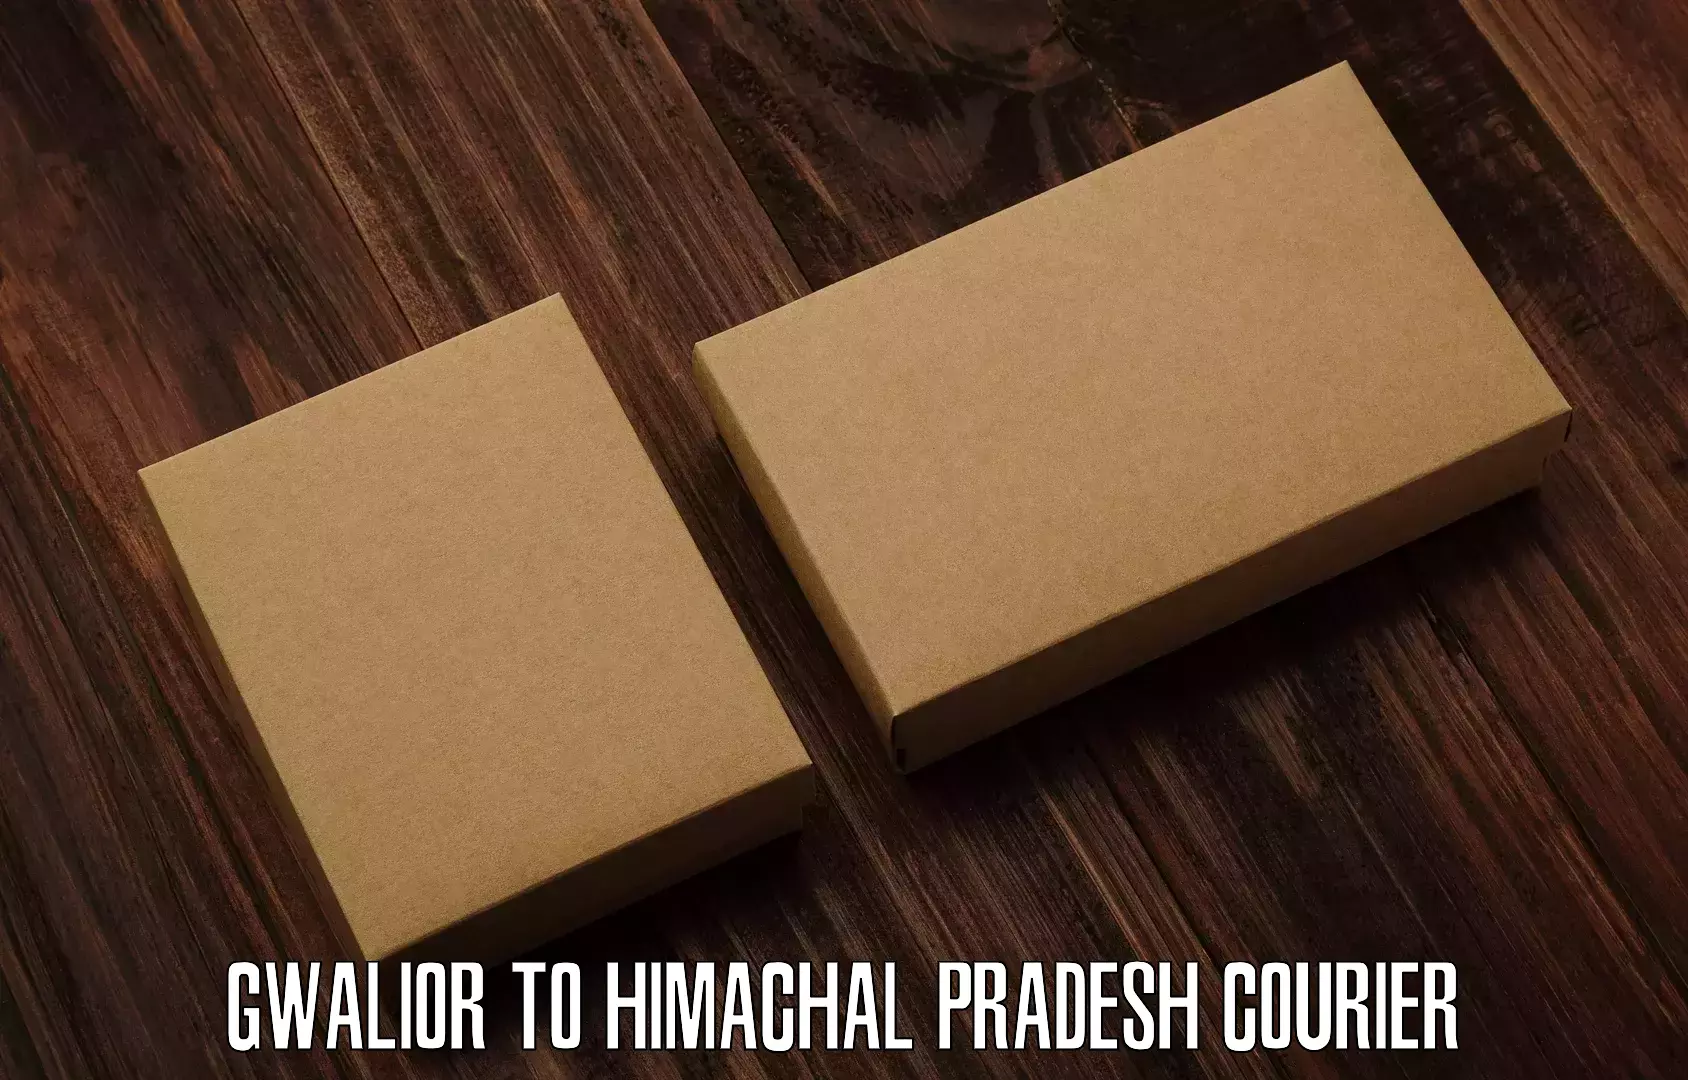 User-friendly delivery service Gwalior to Himachal Pradesh